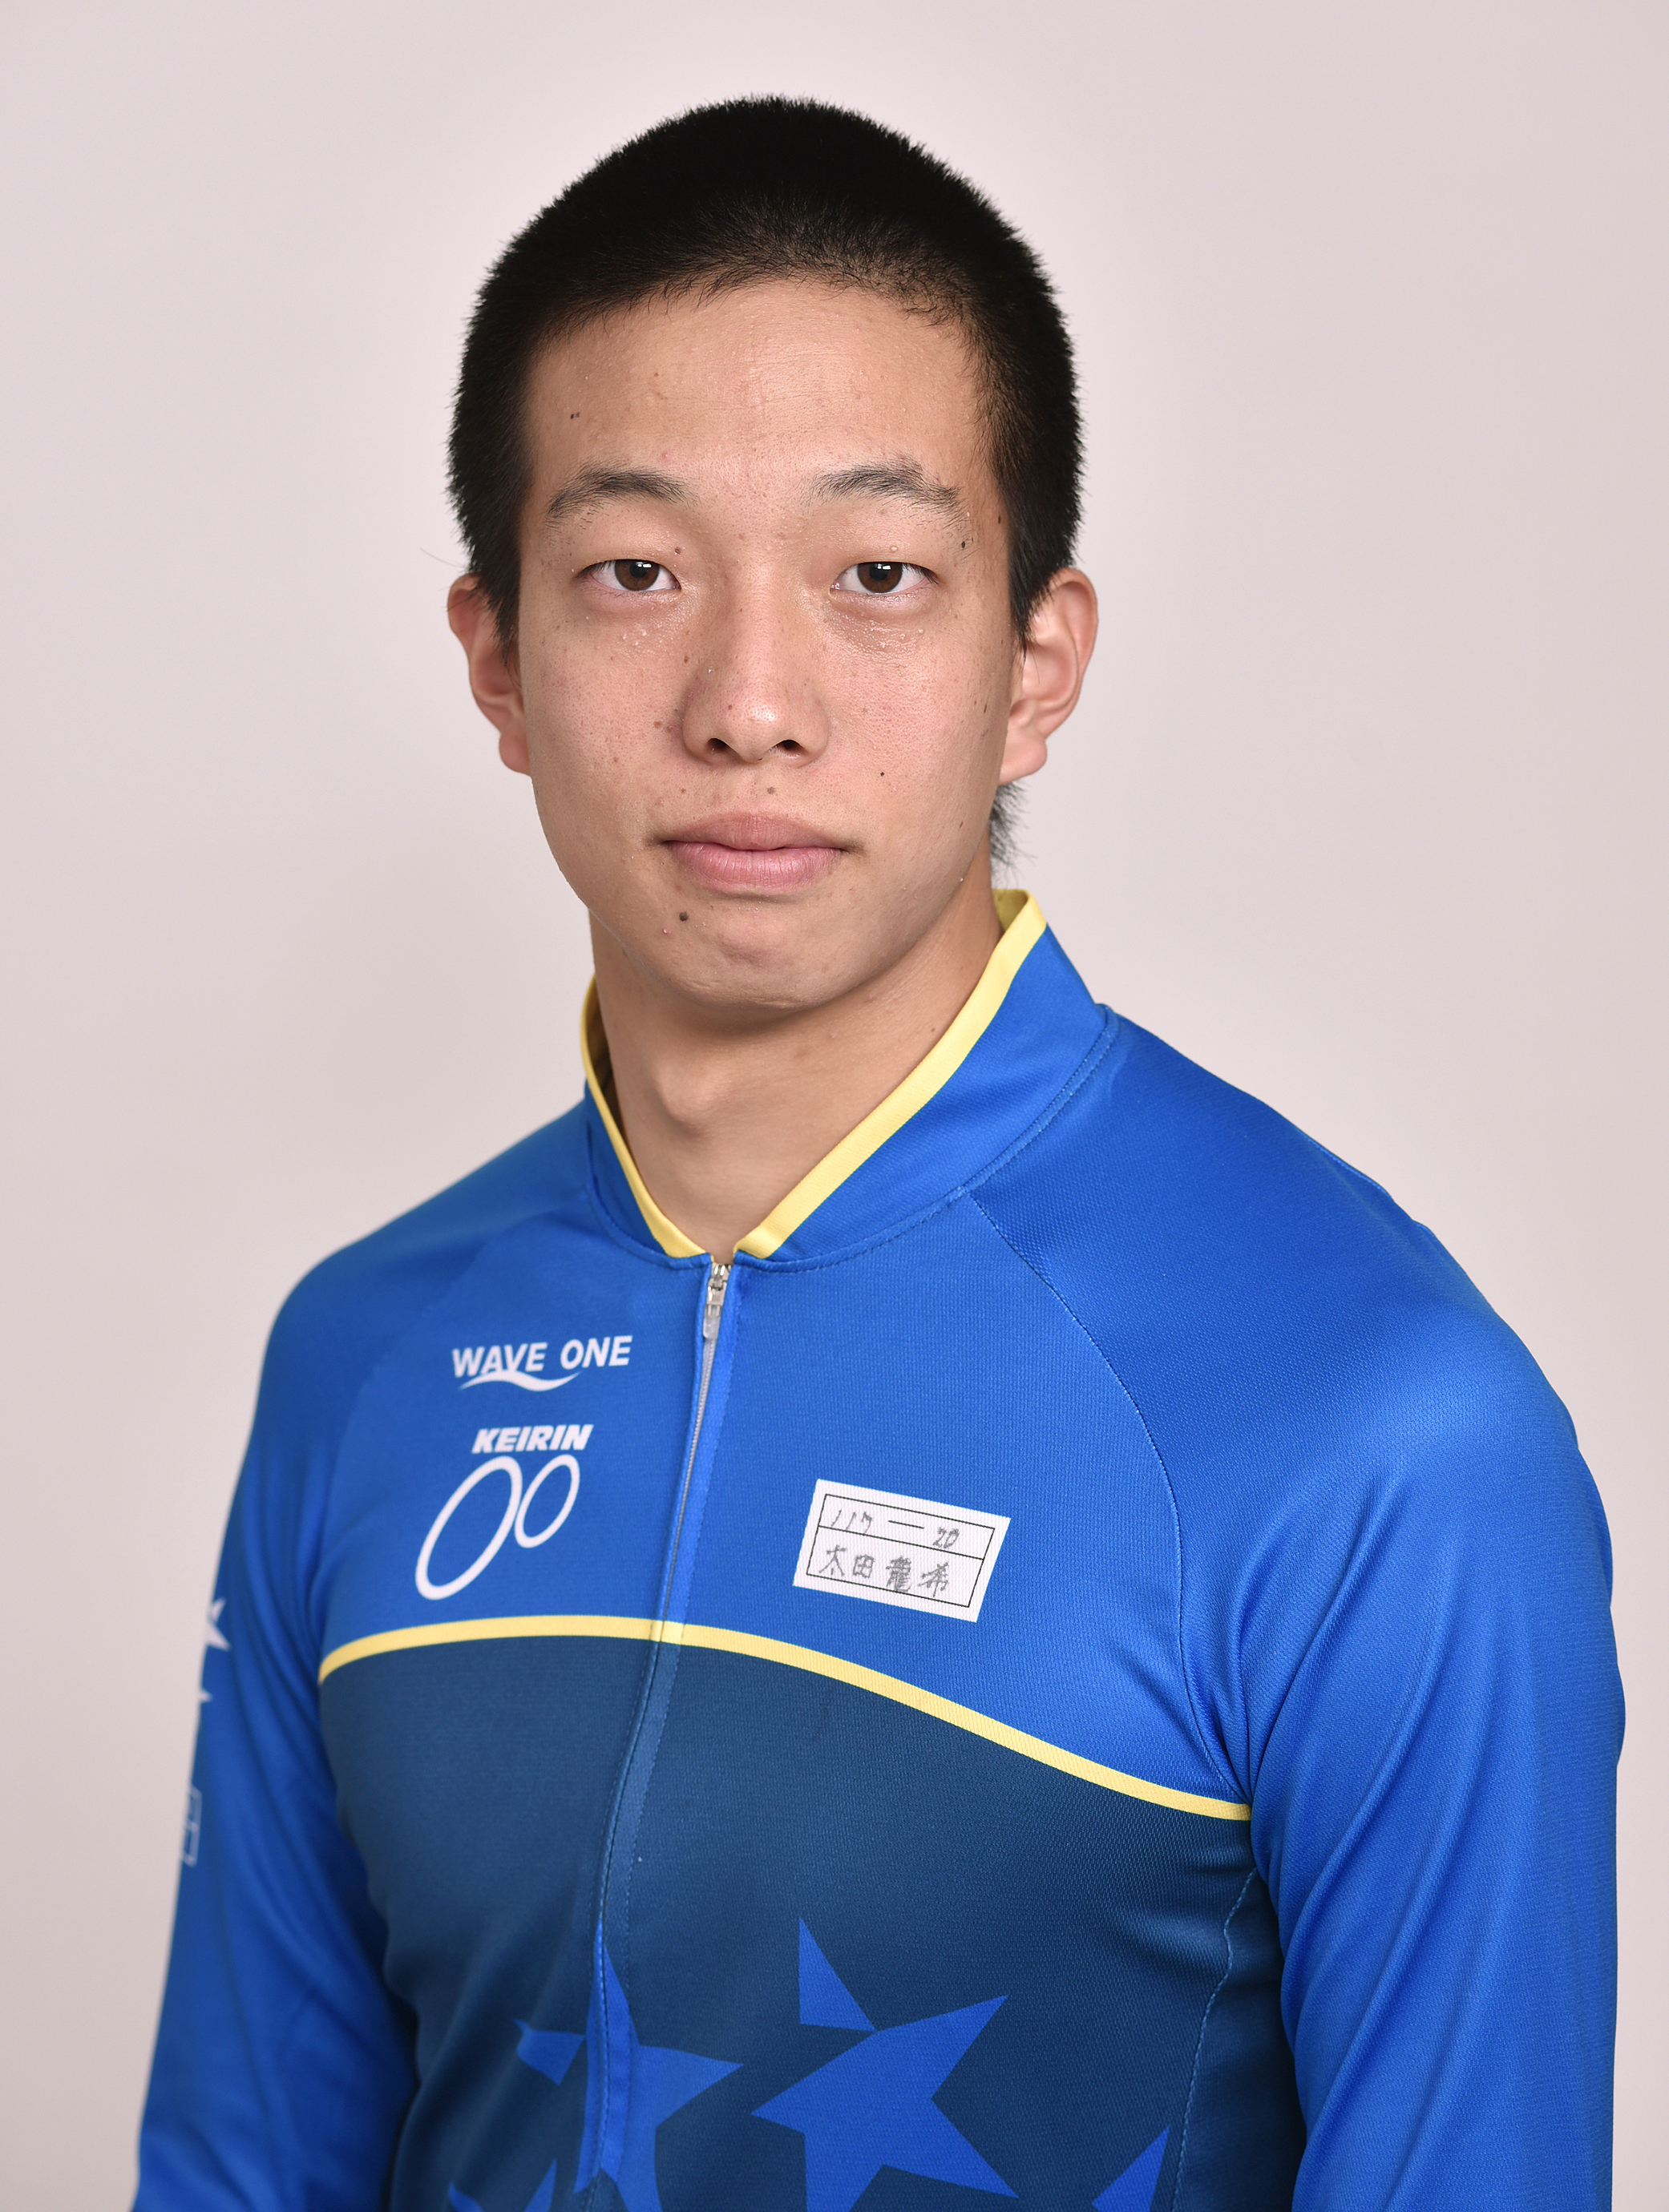 太田 龍希選手の顔写真